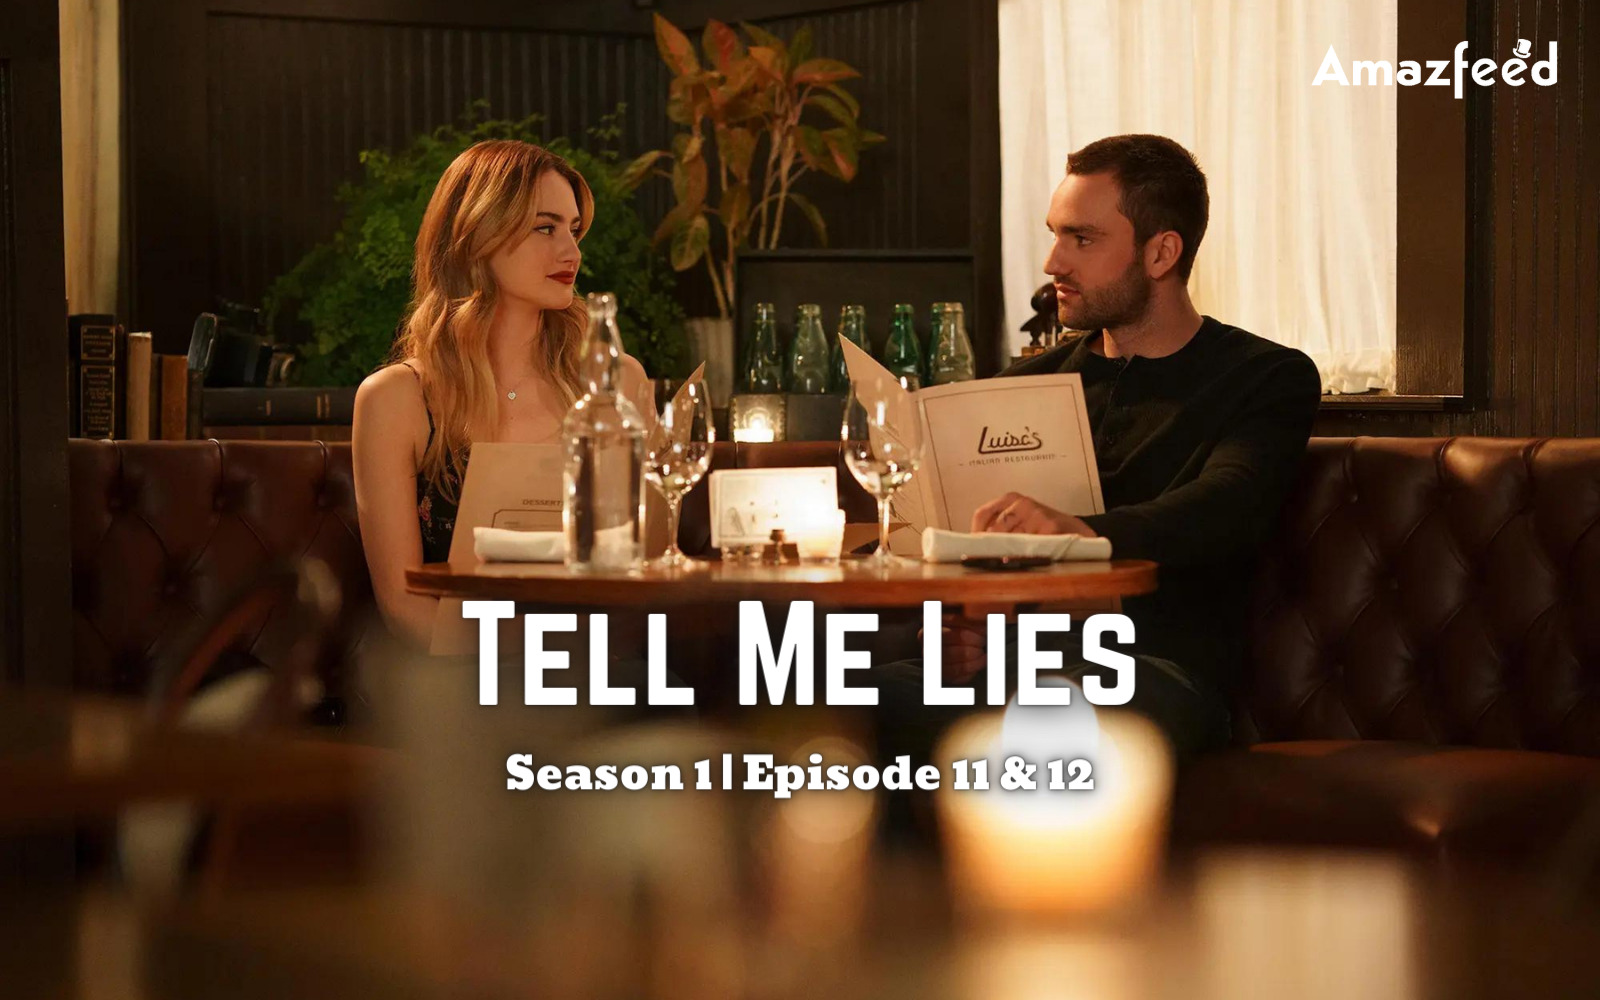 Tell Me Lies Season 1 Episodes 11 & 12 ⇒ Countdown, Release Date